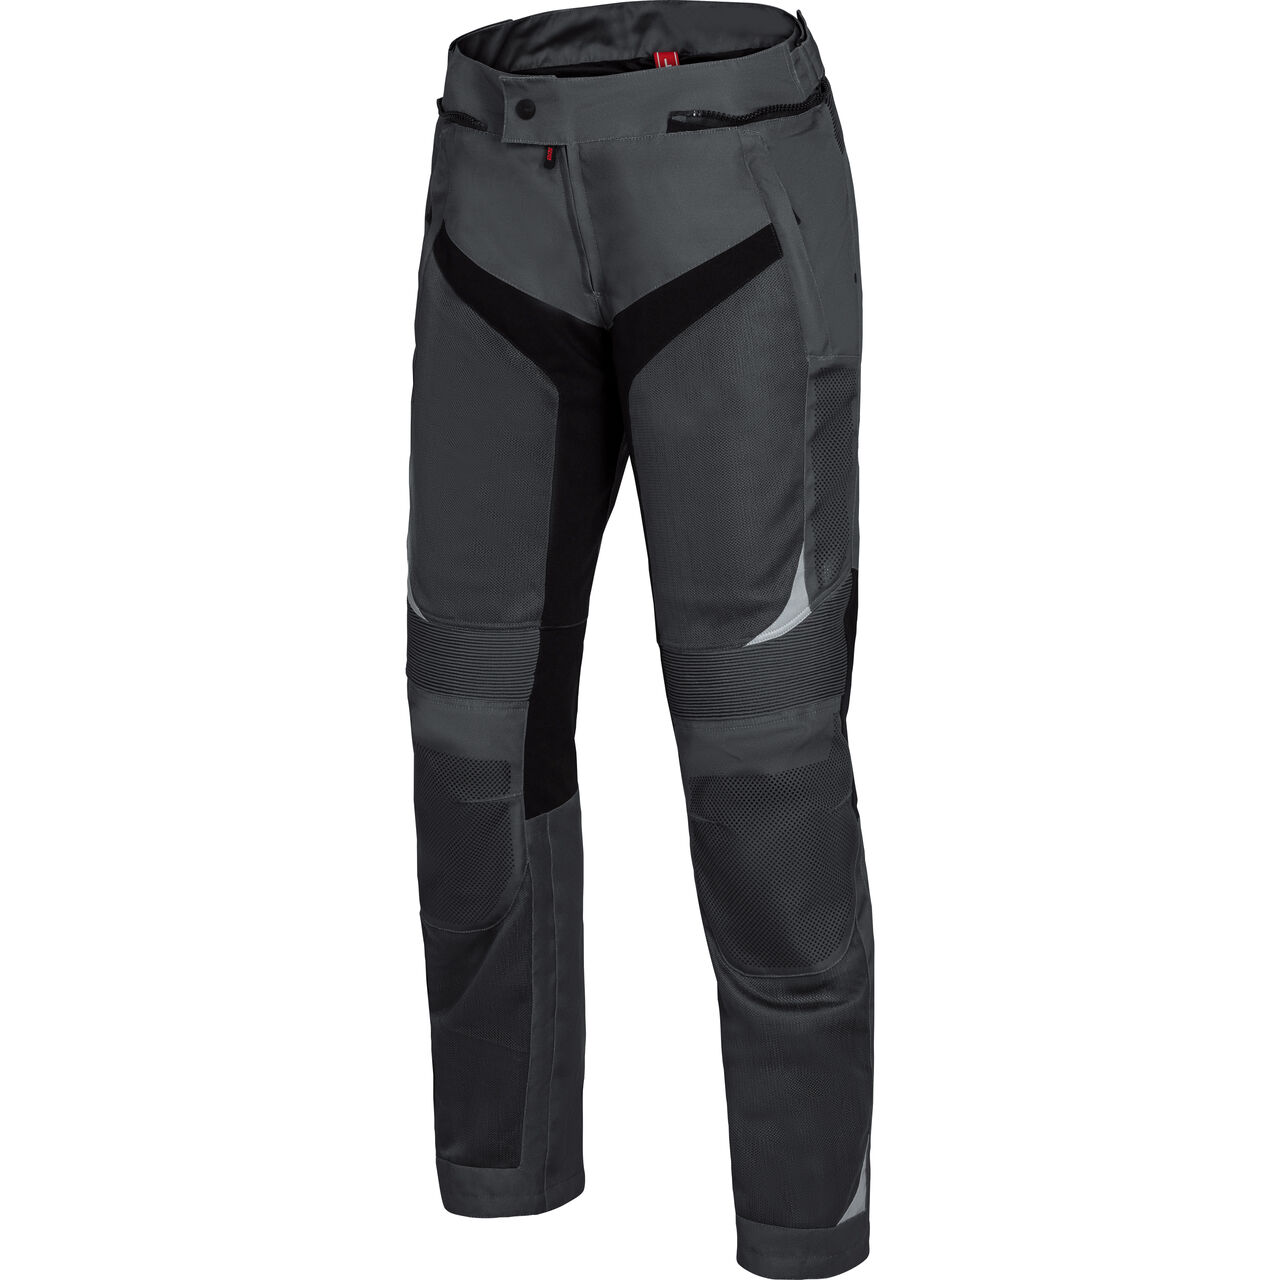 Trigonis-Air Sportstourer Textile Pants dark grey/black 5XL